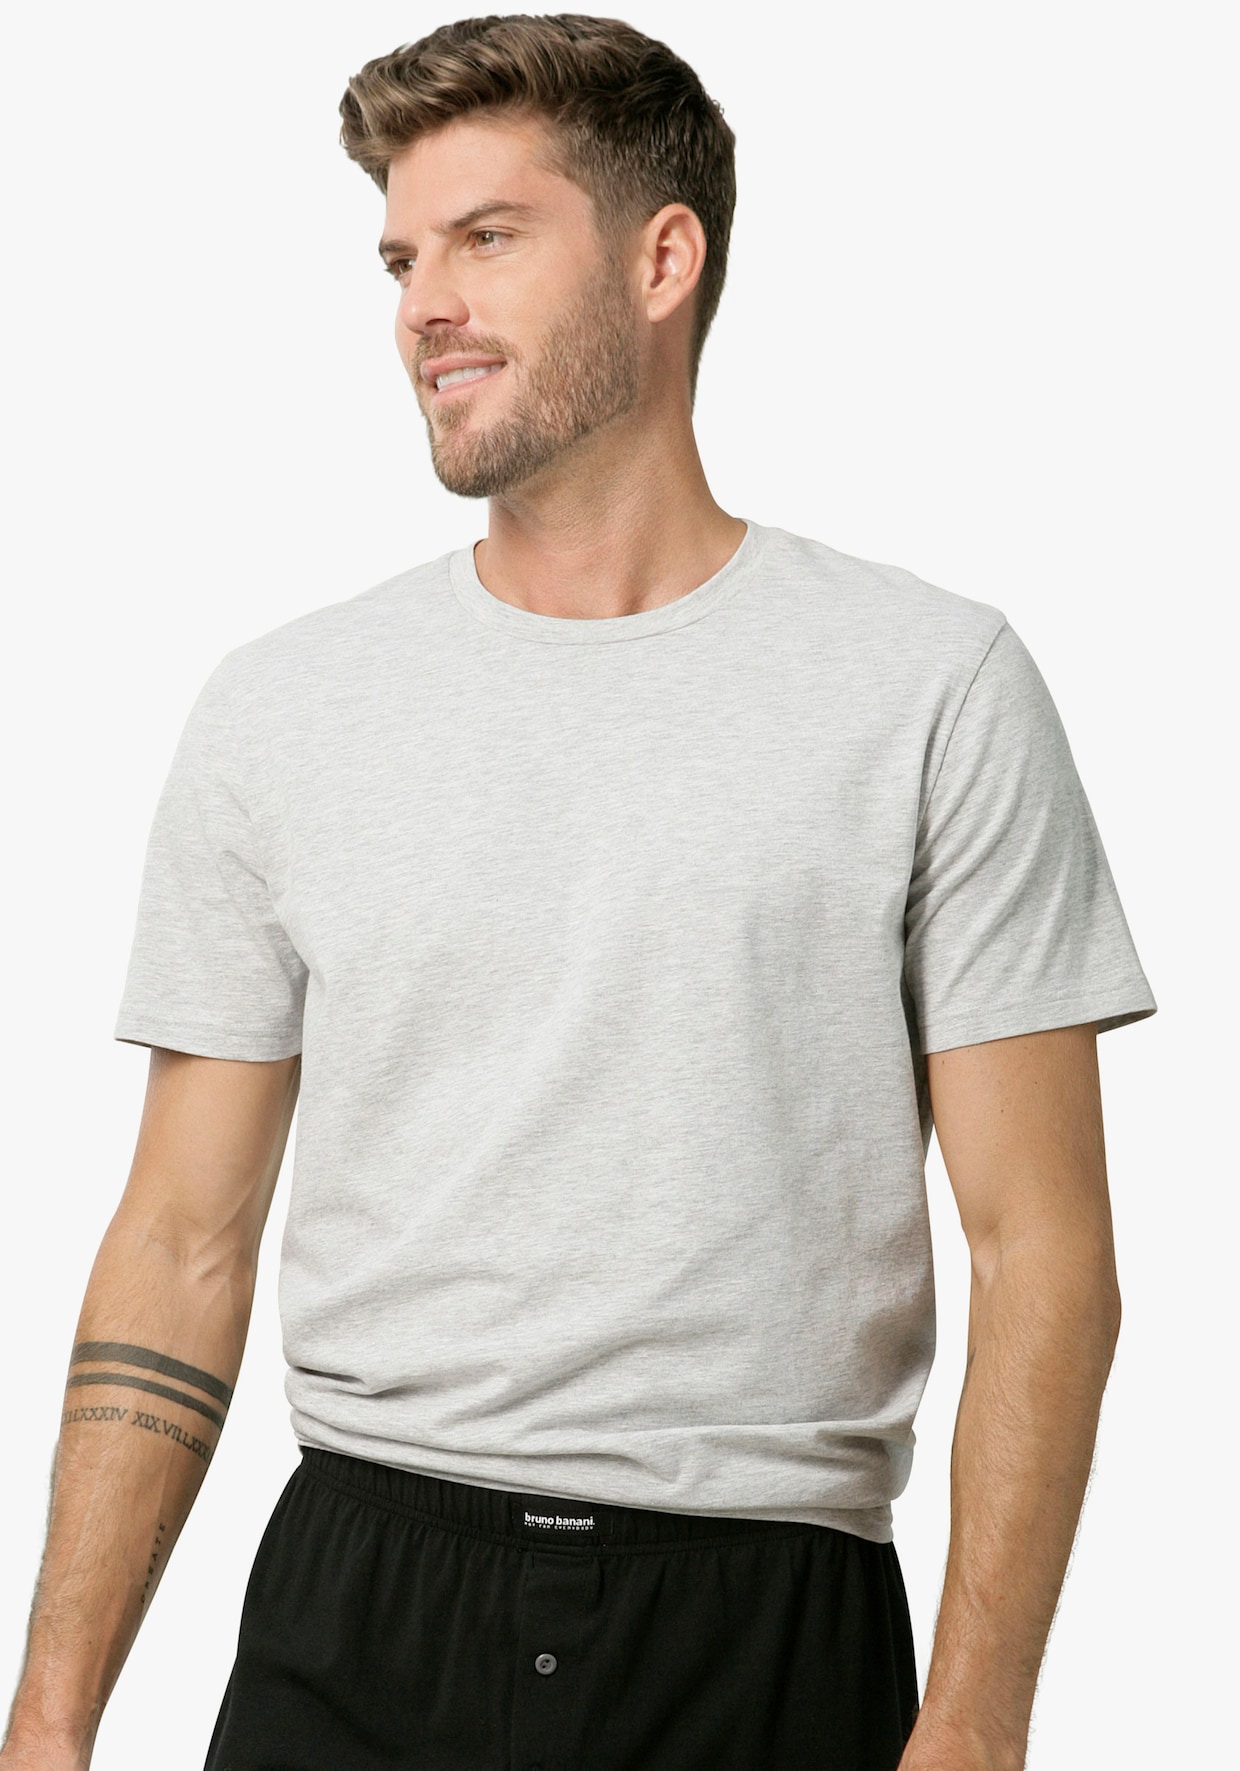 Bruno Banani T-Shirt - navy, grau-meliert, petrol